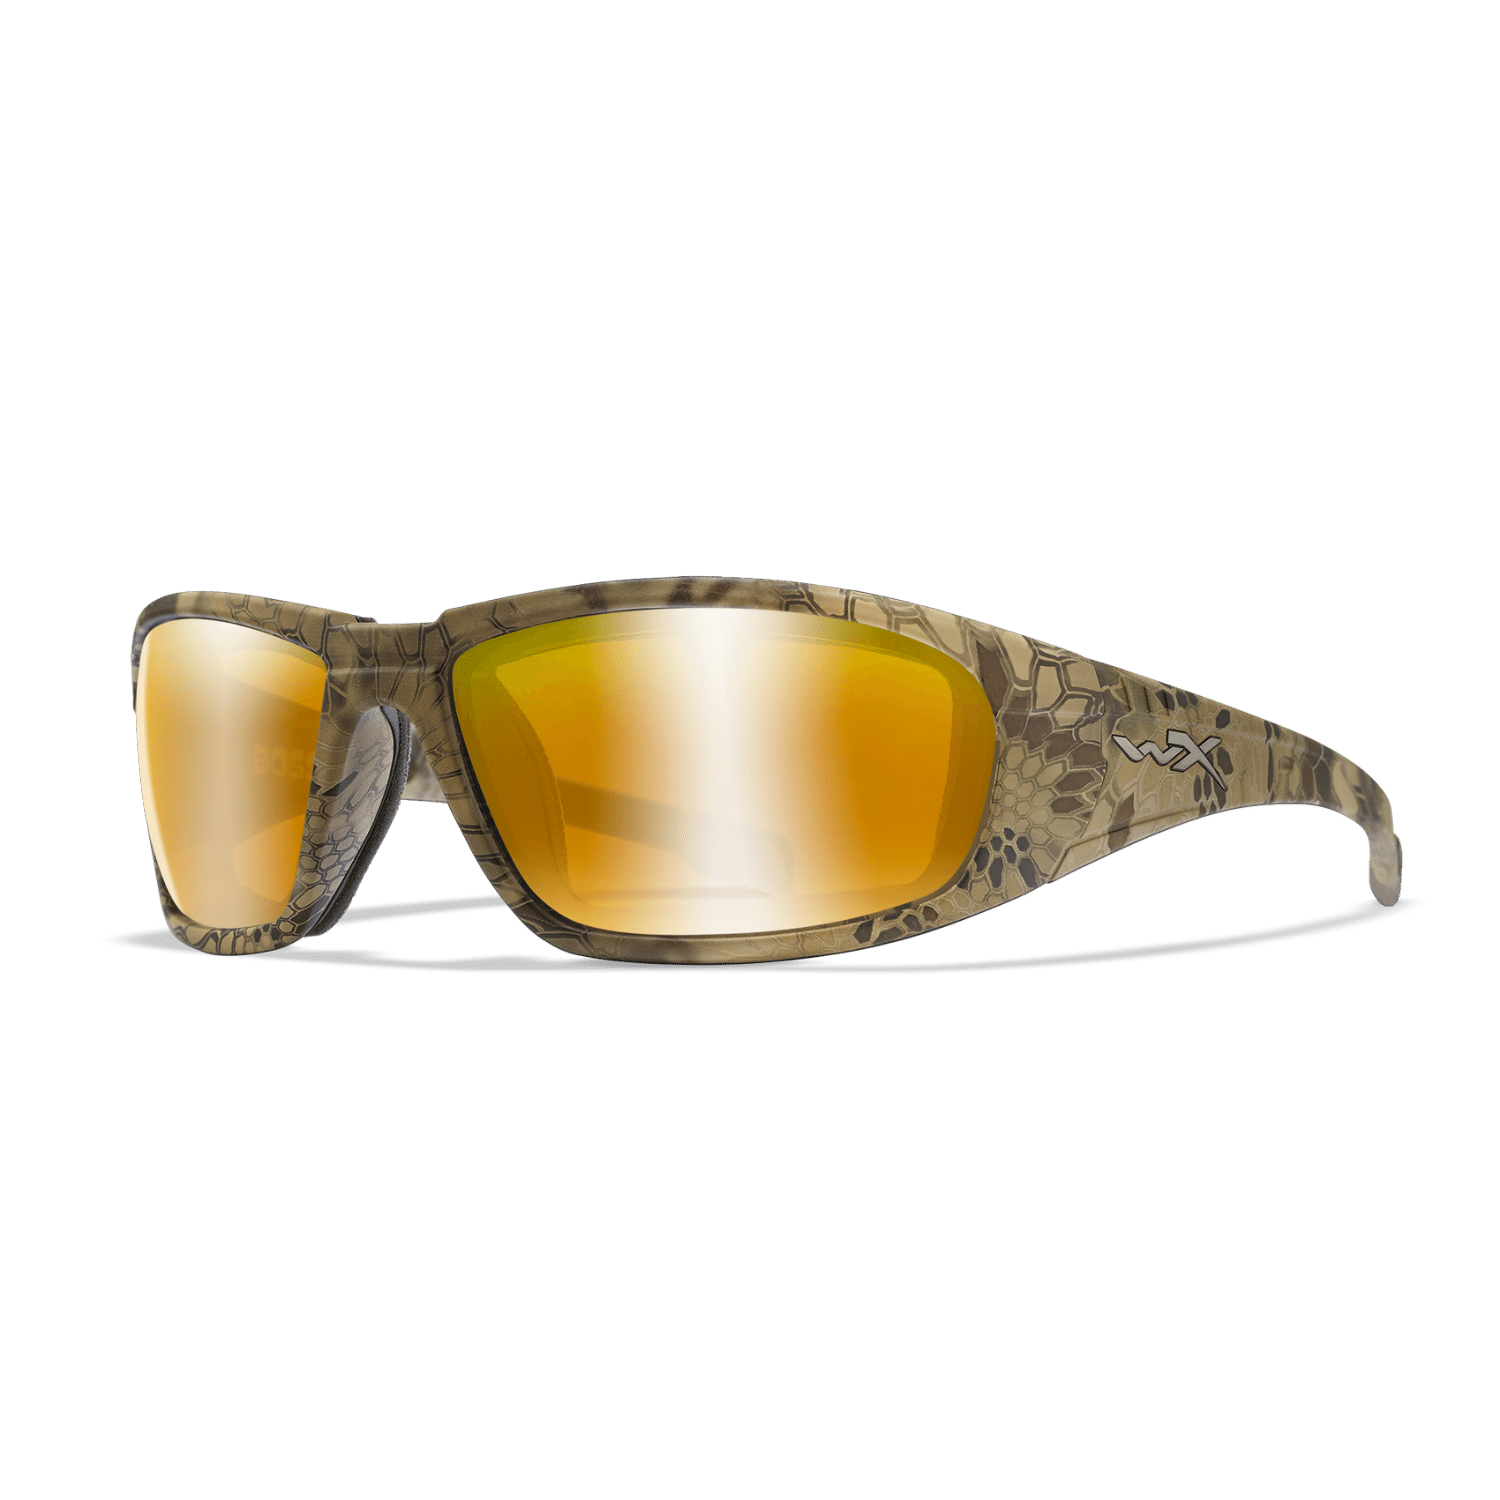 Details 161+ amber mirror sunglasses latest